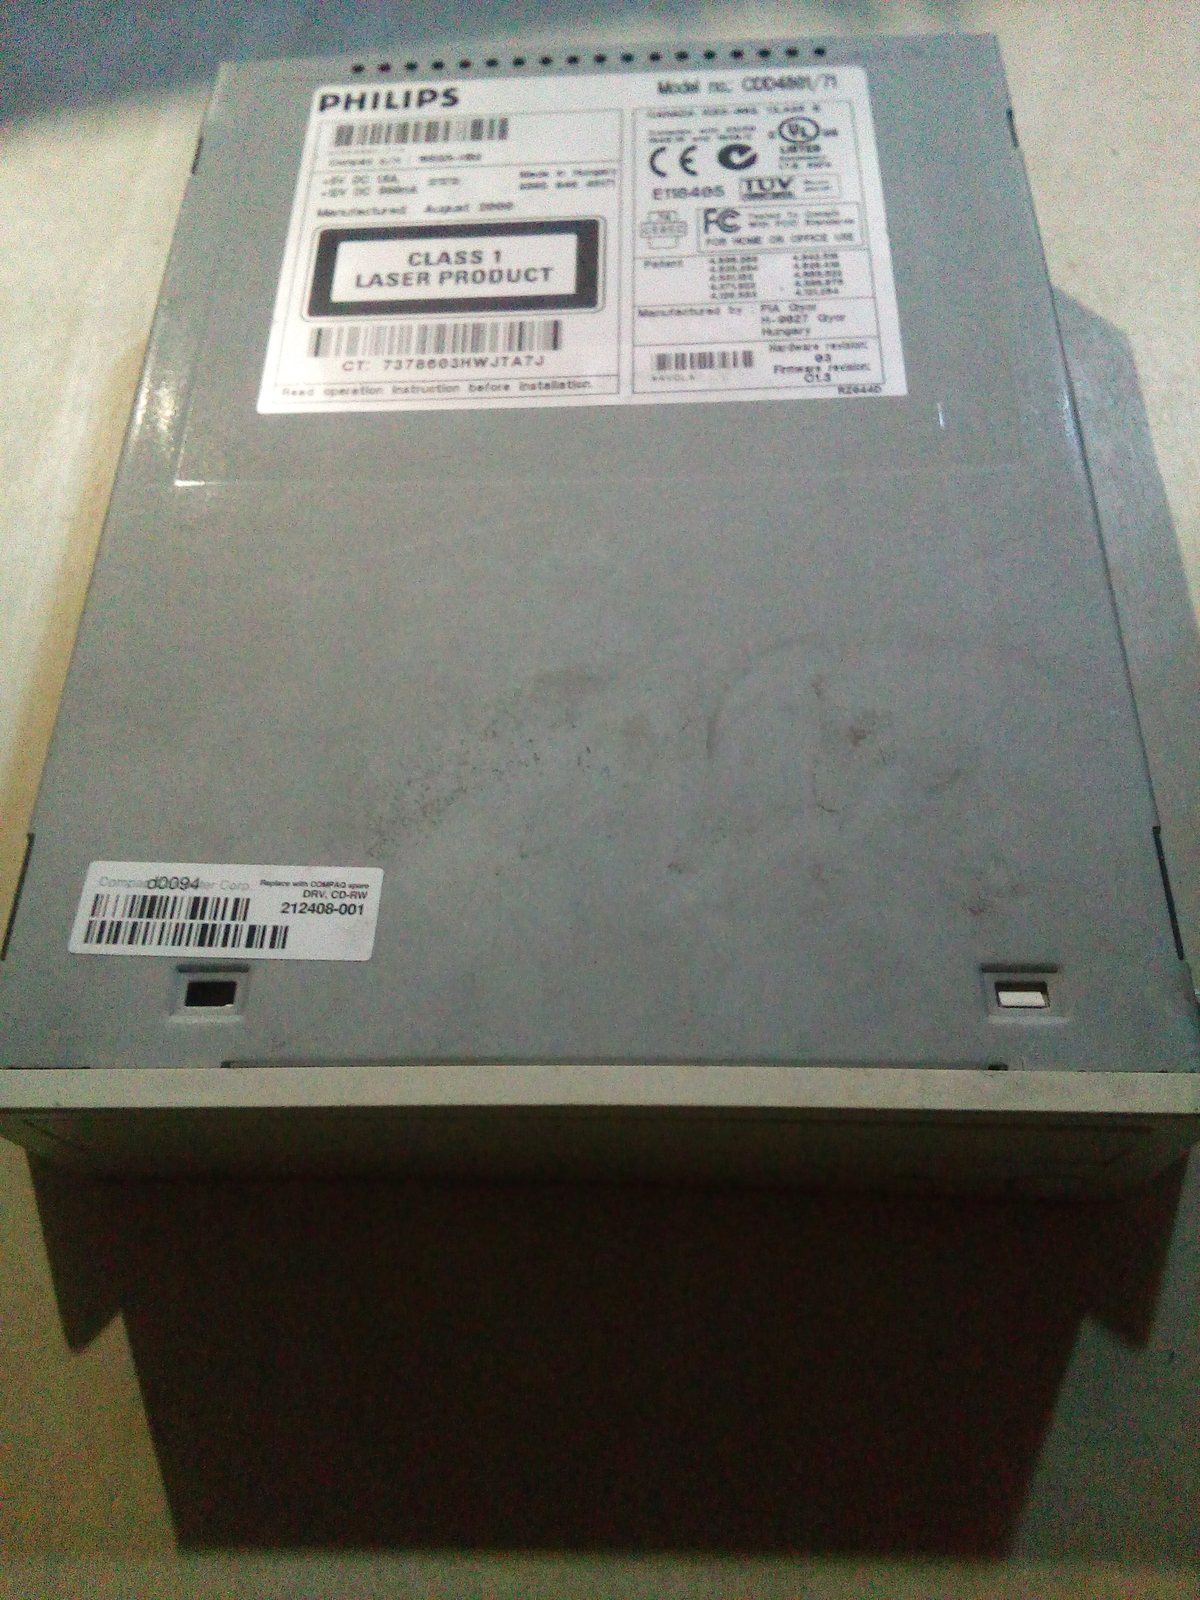 Compaq Presario 5BW284 series 5000 CD-R 165125-HB2 - $10.99